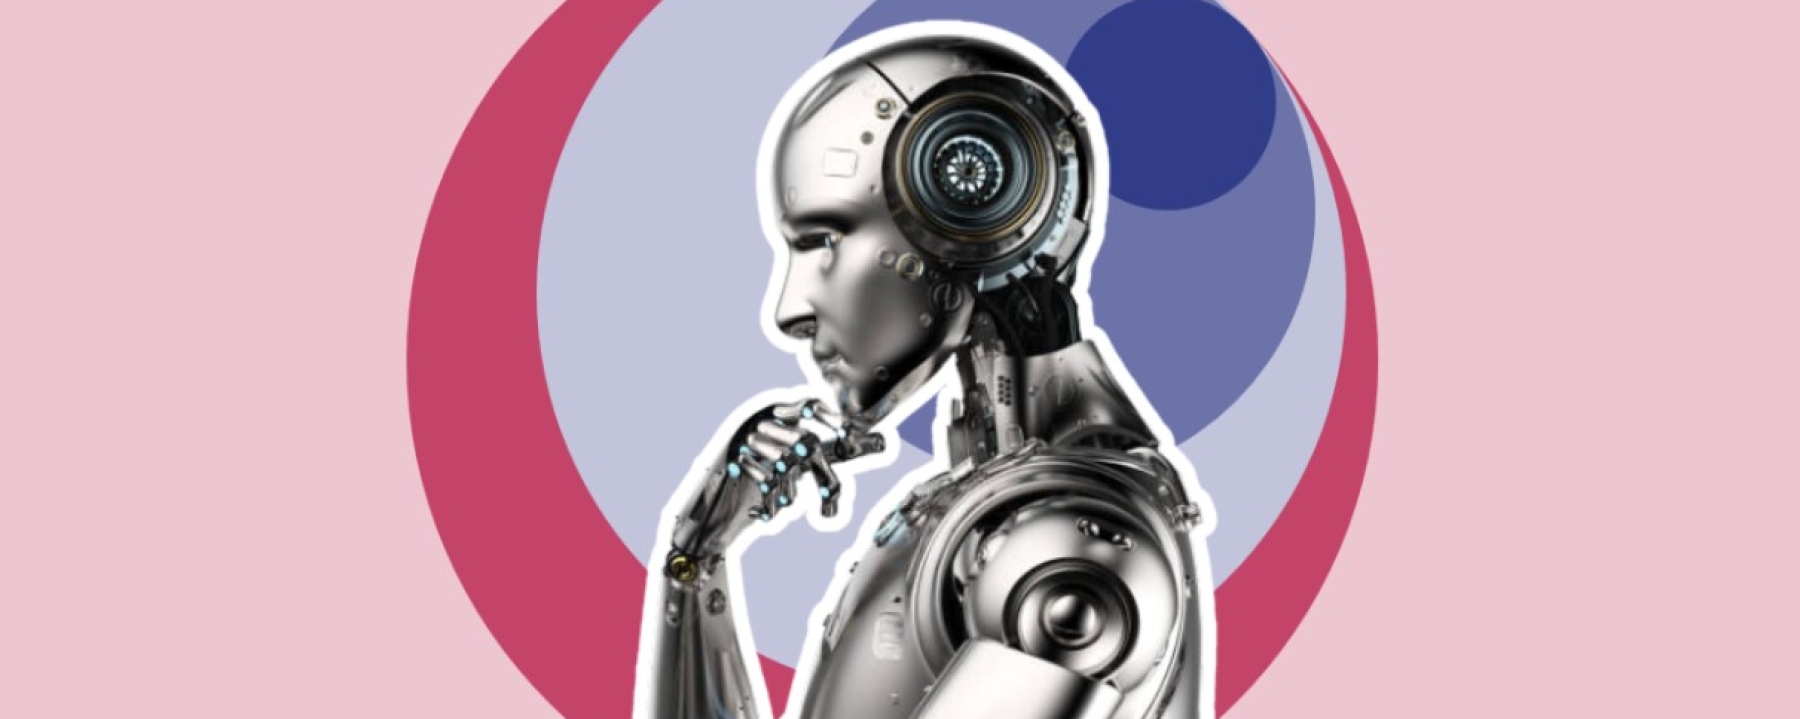 Come&Share : “Marketing et Intelligence Artificielle”